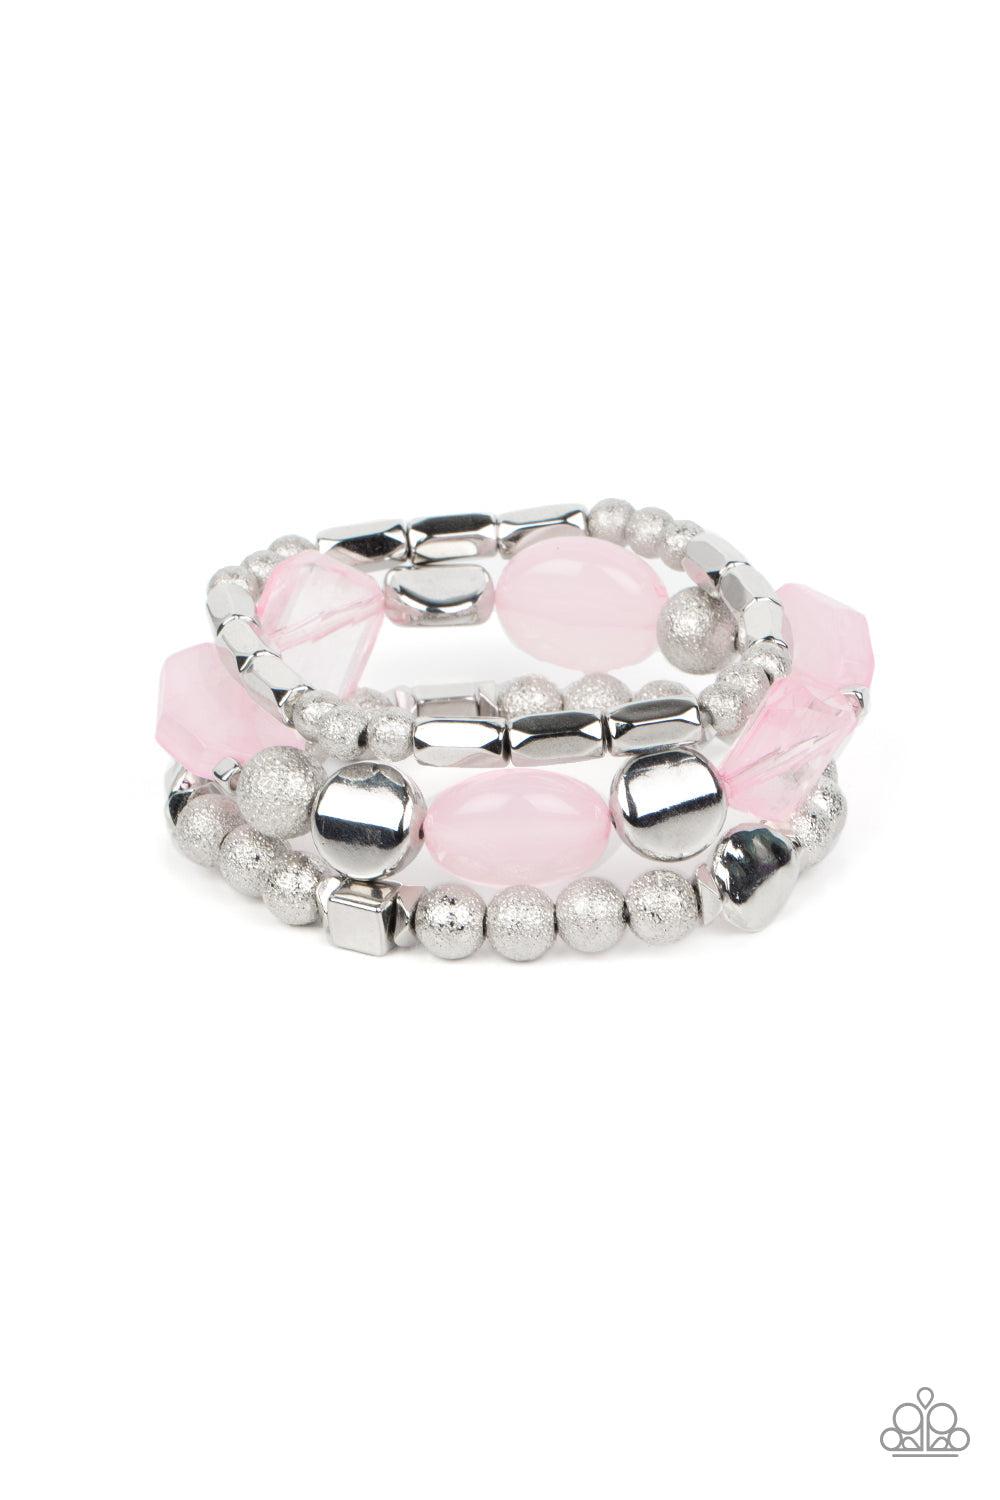 Marina Magic Pink Bracelet - Paparazzi Accessories- lightbox - CarasShop.com - $5 Jewelry by Cara Jewels